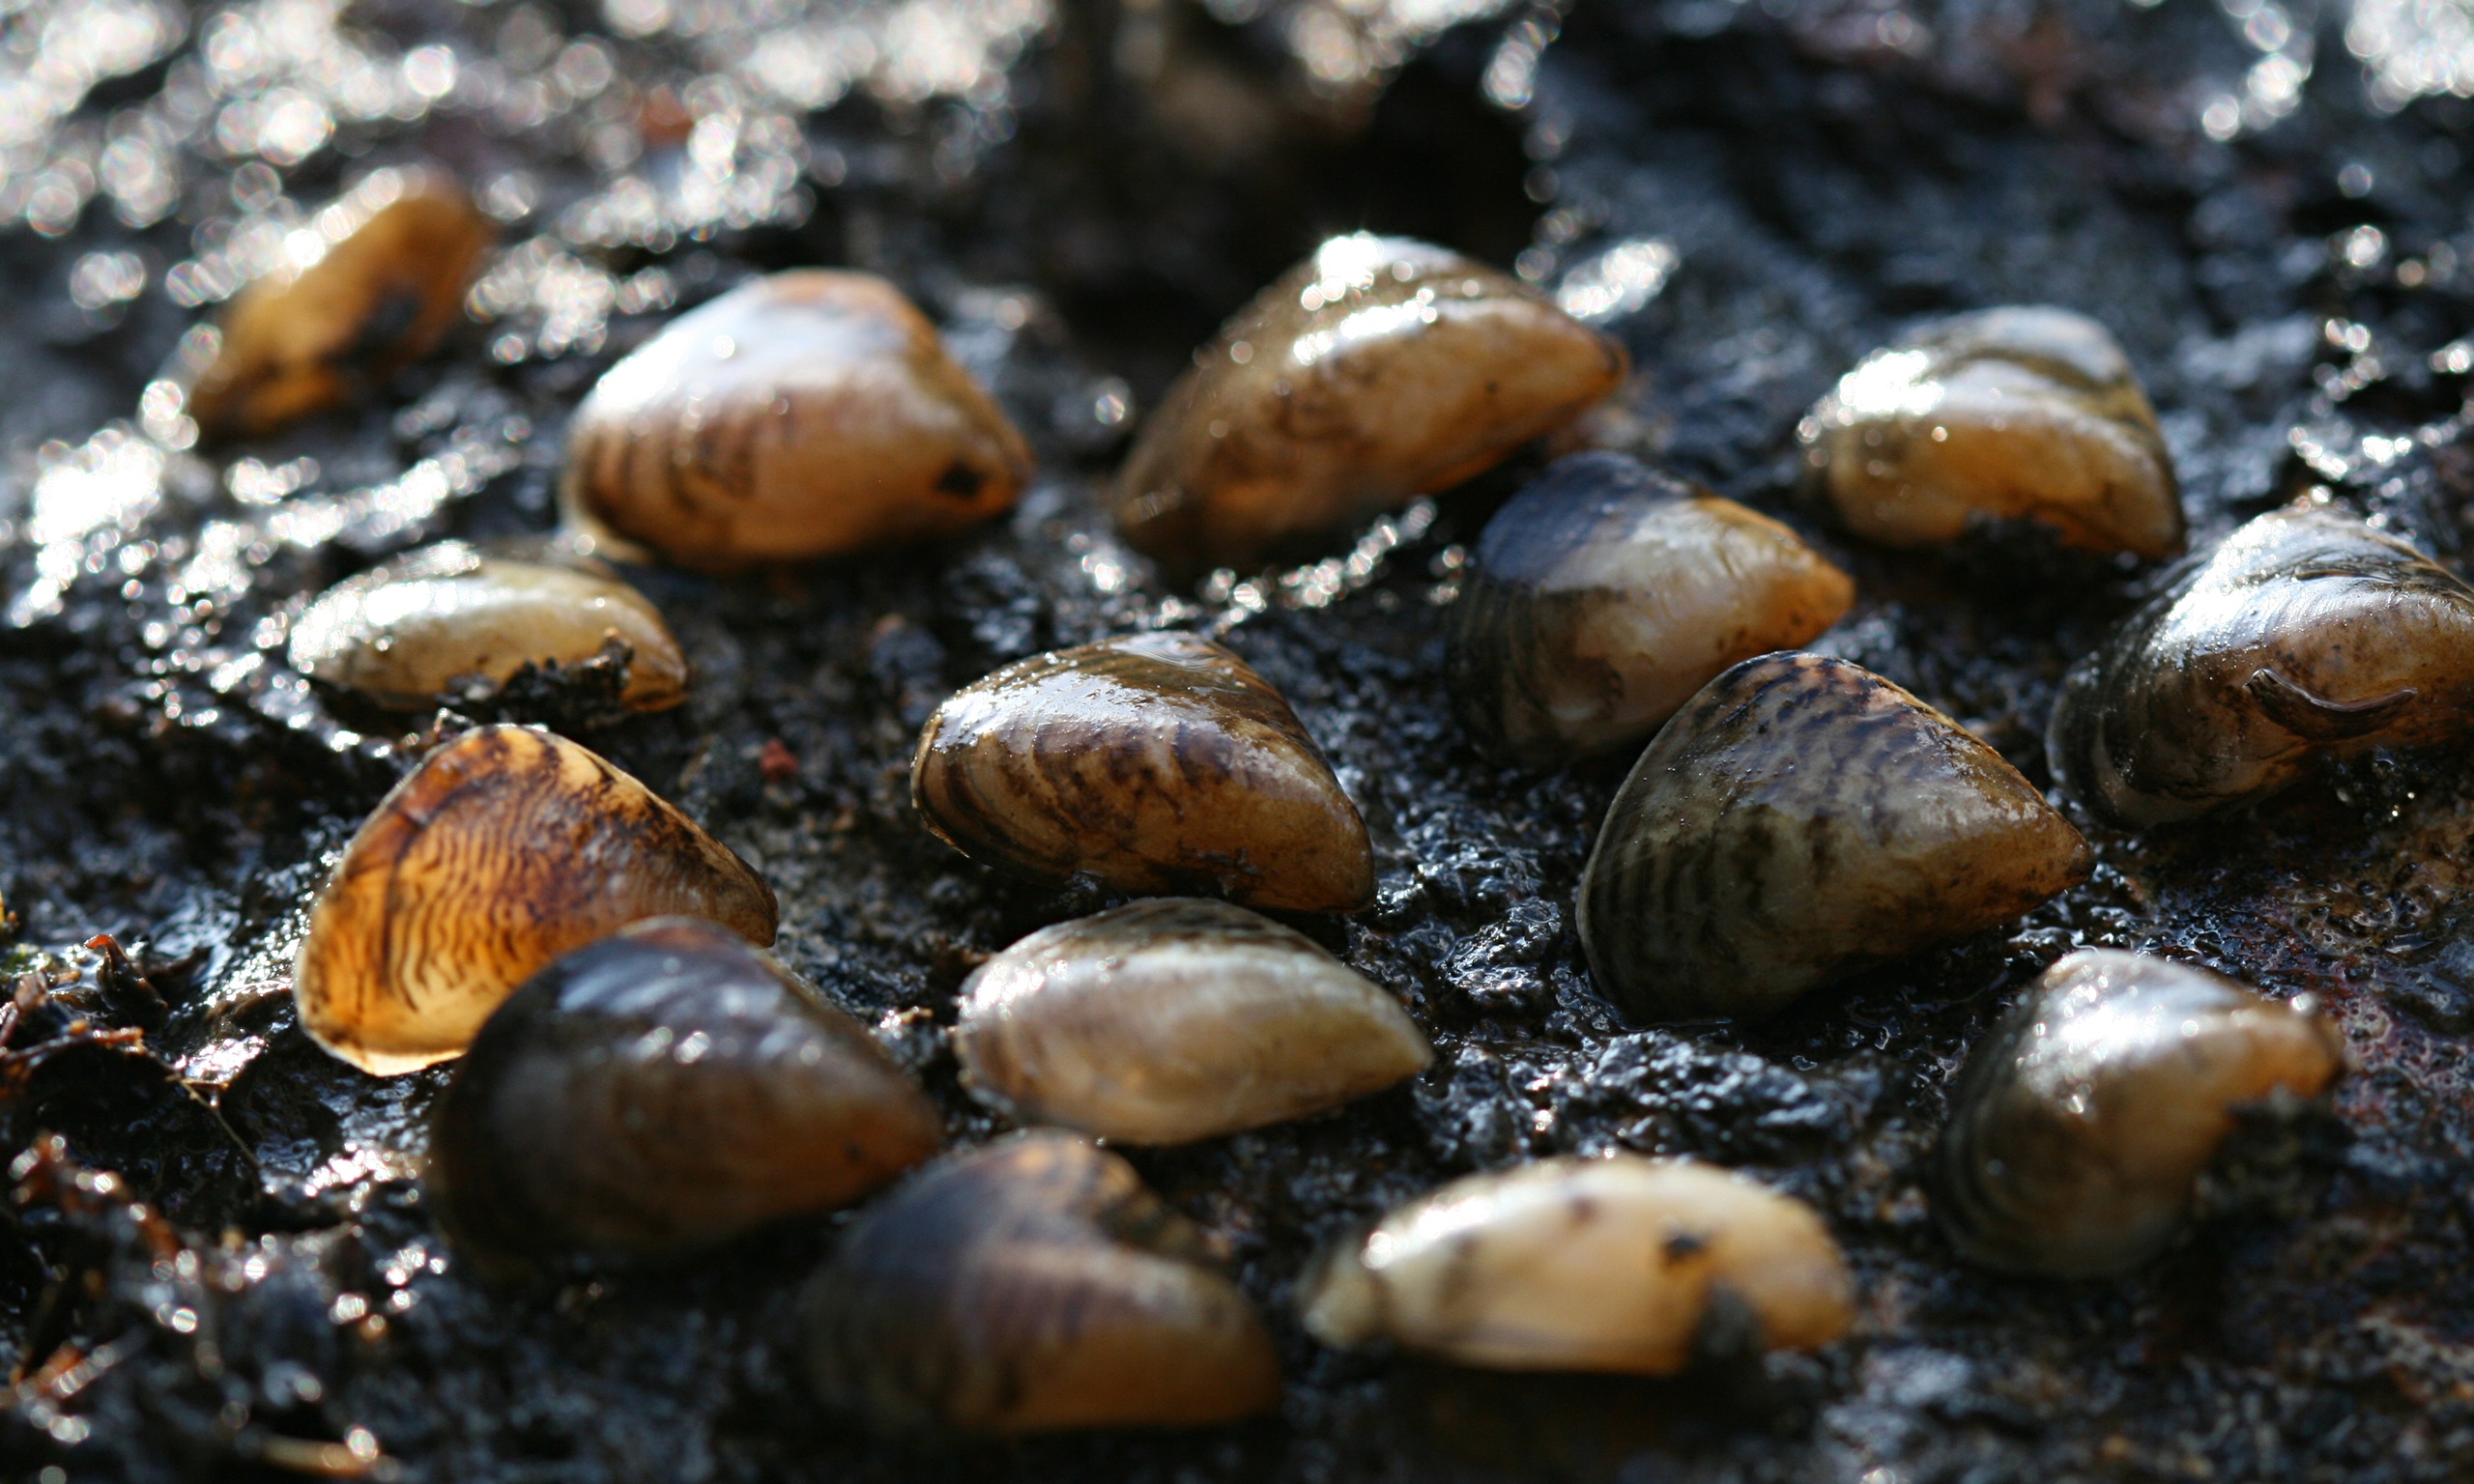 warning-as-alien-mussels-found-near-heathrow-airport-environment